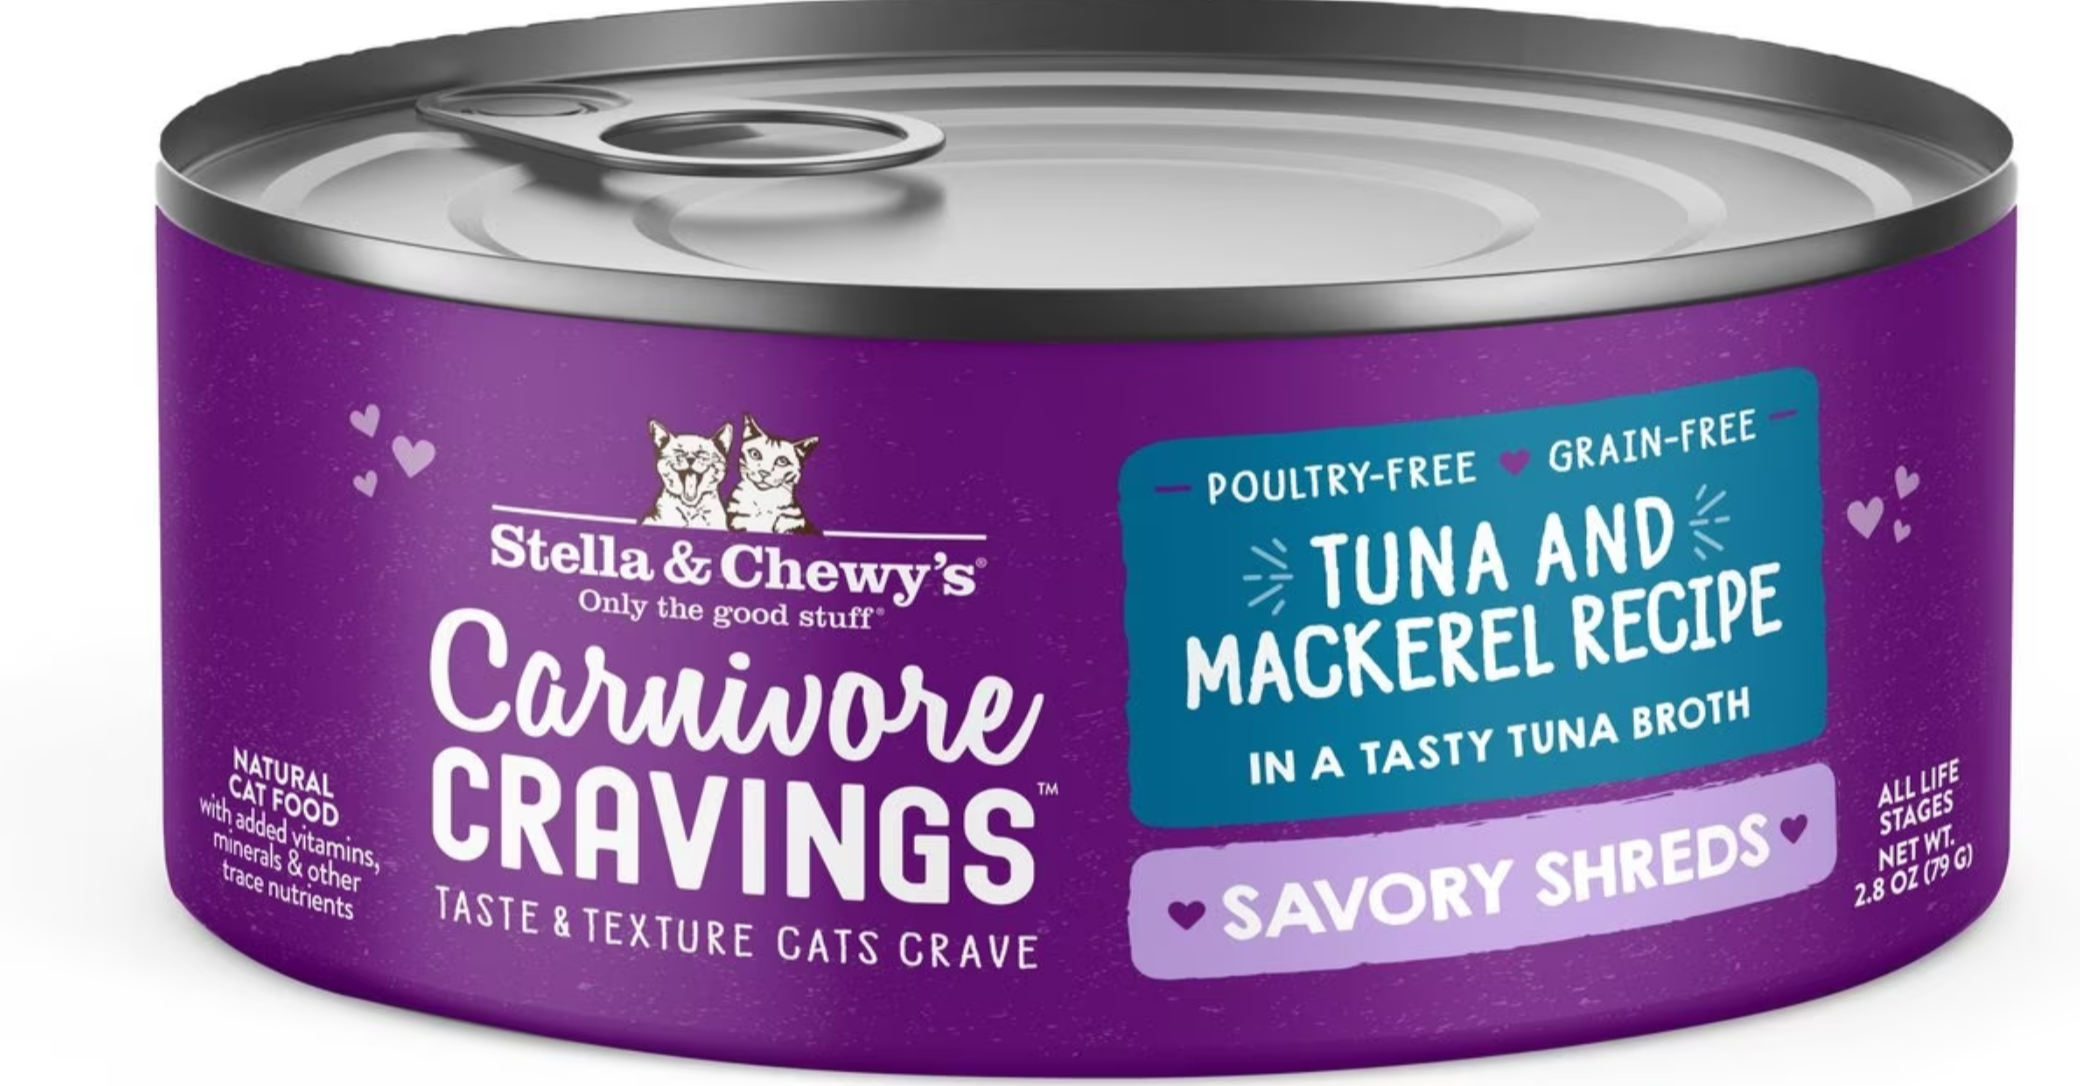 Stella & Chewy's Carnivore Cravings Savory Shreds Tuna & Mackerel Recipe - 2.8oz Can